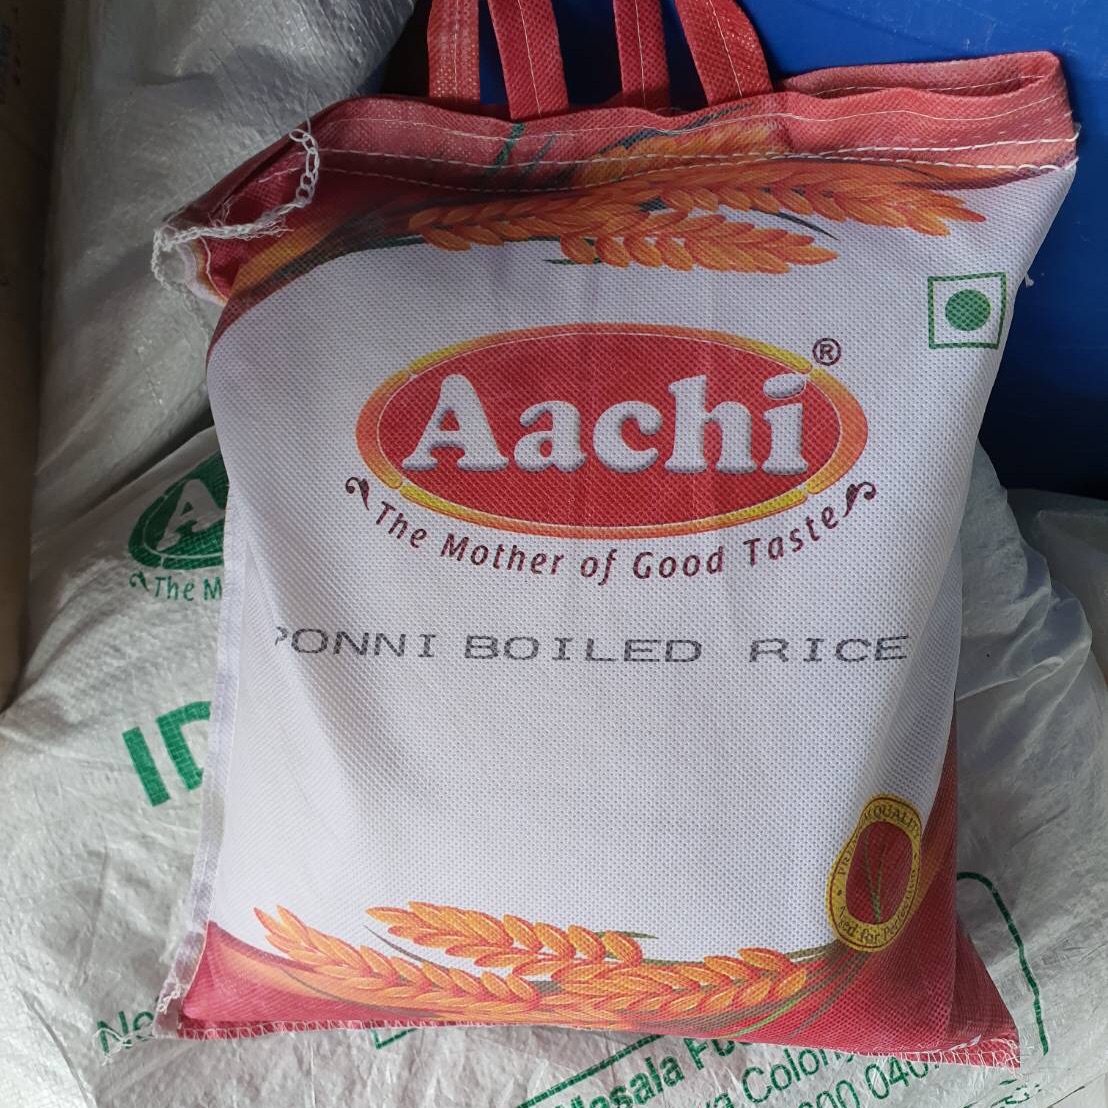 Aachi ponni boil rice 5kg